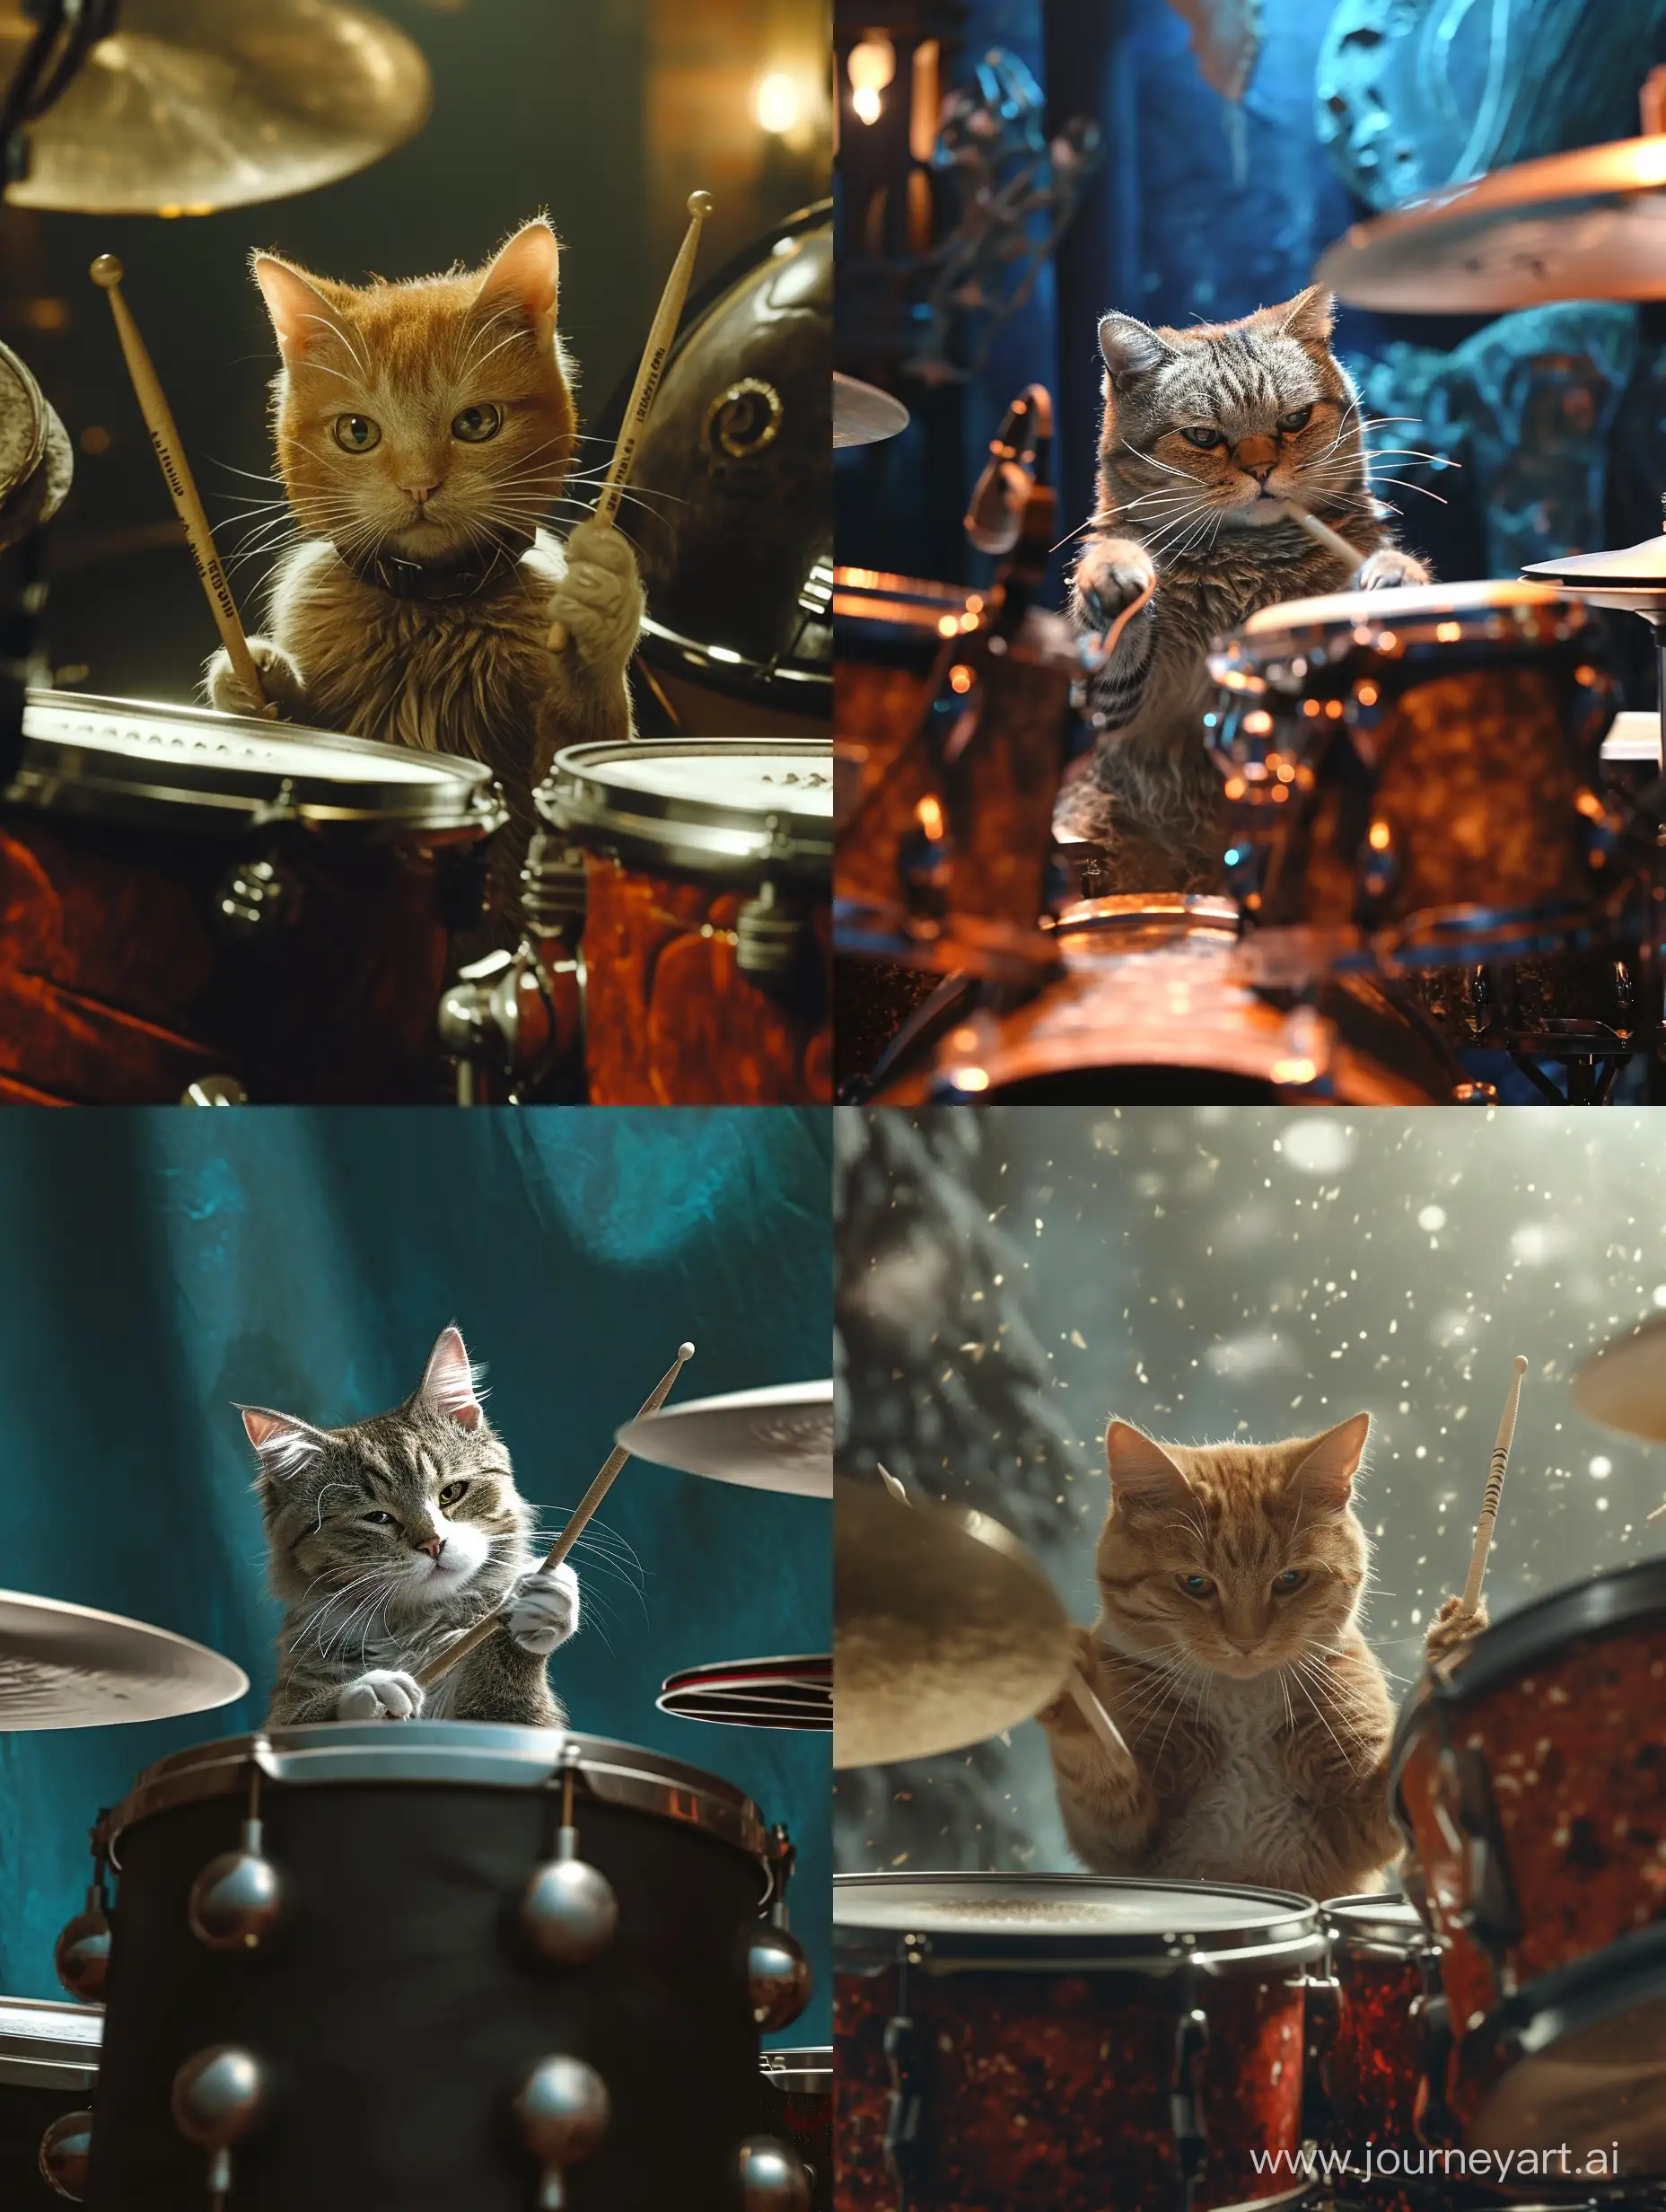 Quirky-Cat-Drummer-in-Tim-Burton-Style